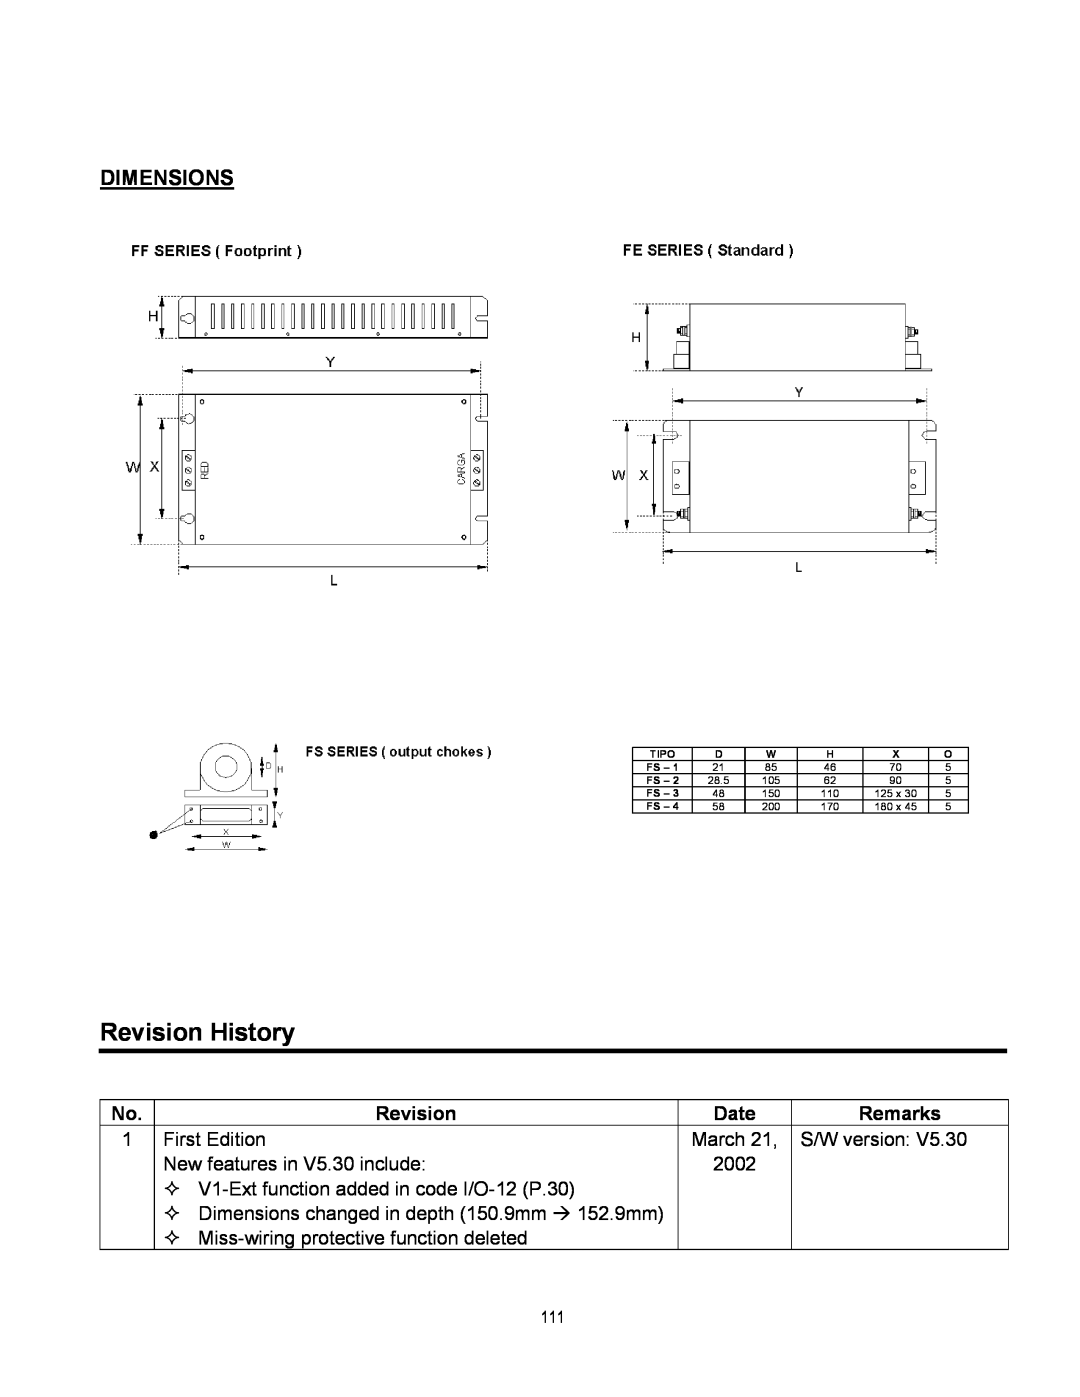 Cleveland Range inverter manual Revision History, Dimensions 